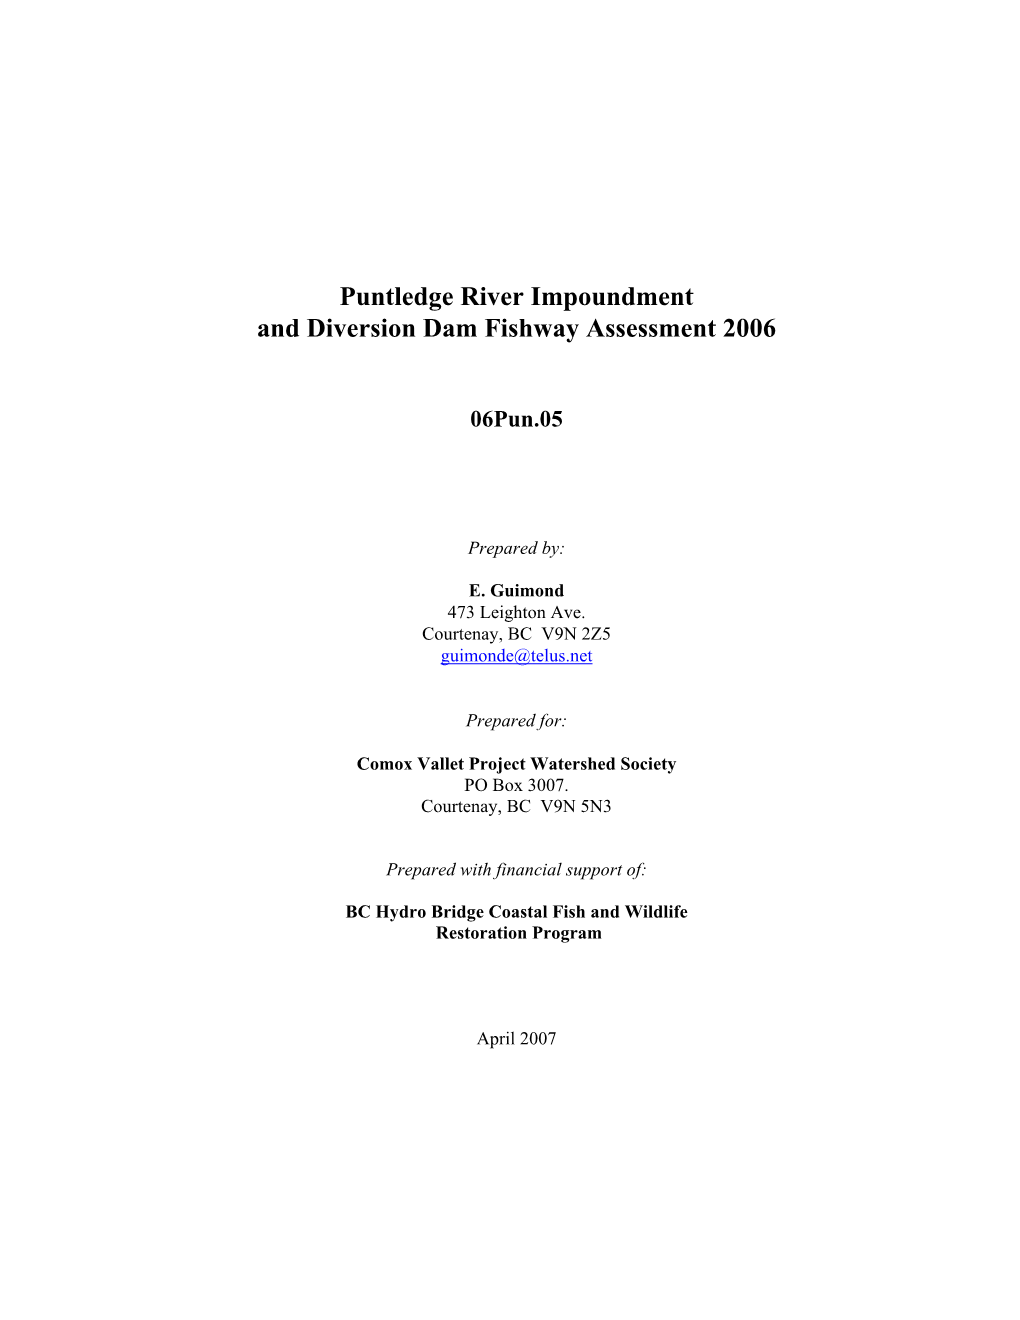 Puntledge River Impoundment and Diversion Dam Fishway Assessment 2006